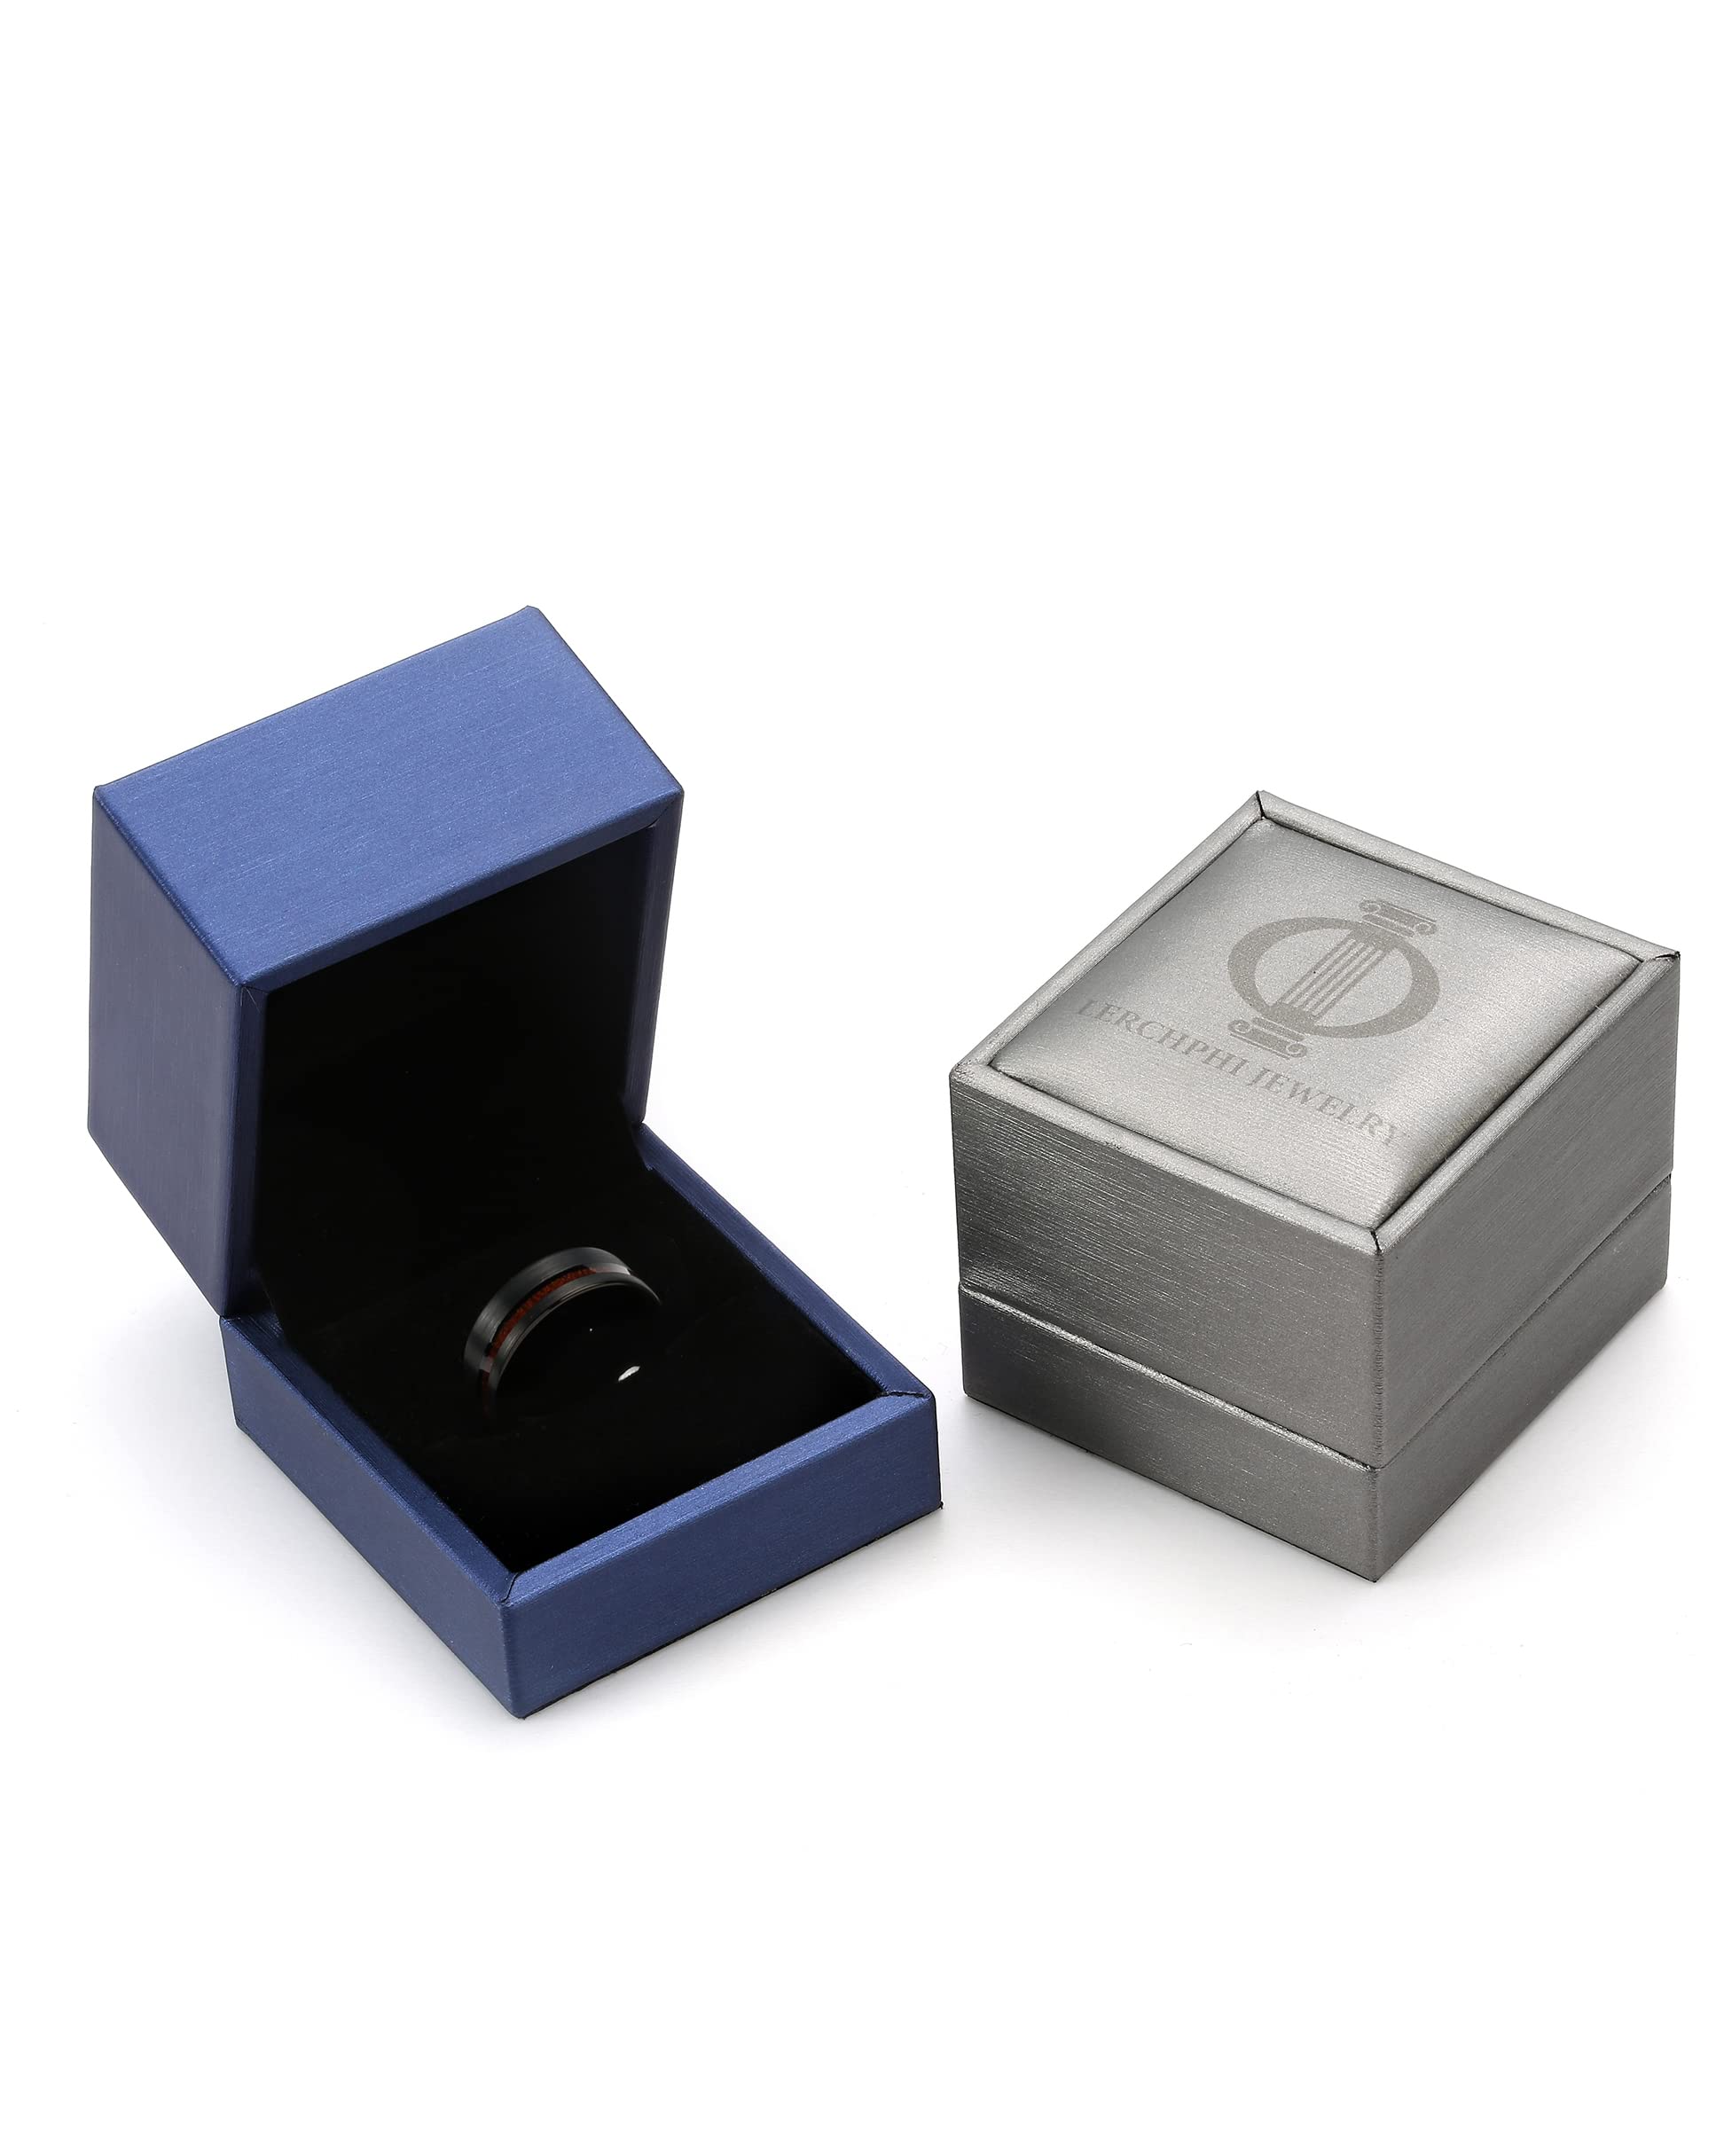 LerchPhi 8MM Mens Wedding Band Black Zirconium Ring KOA Wood Inlay Stepped Edge Unisex Promise Ring for Him and Her